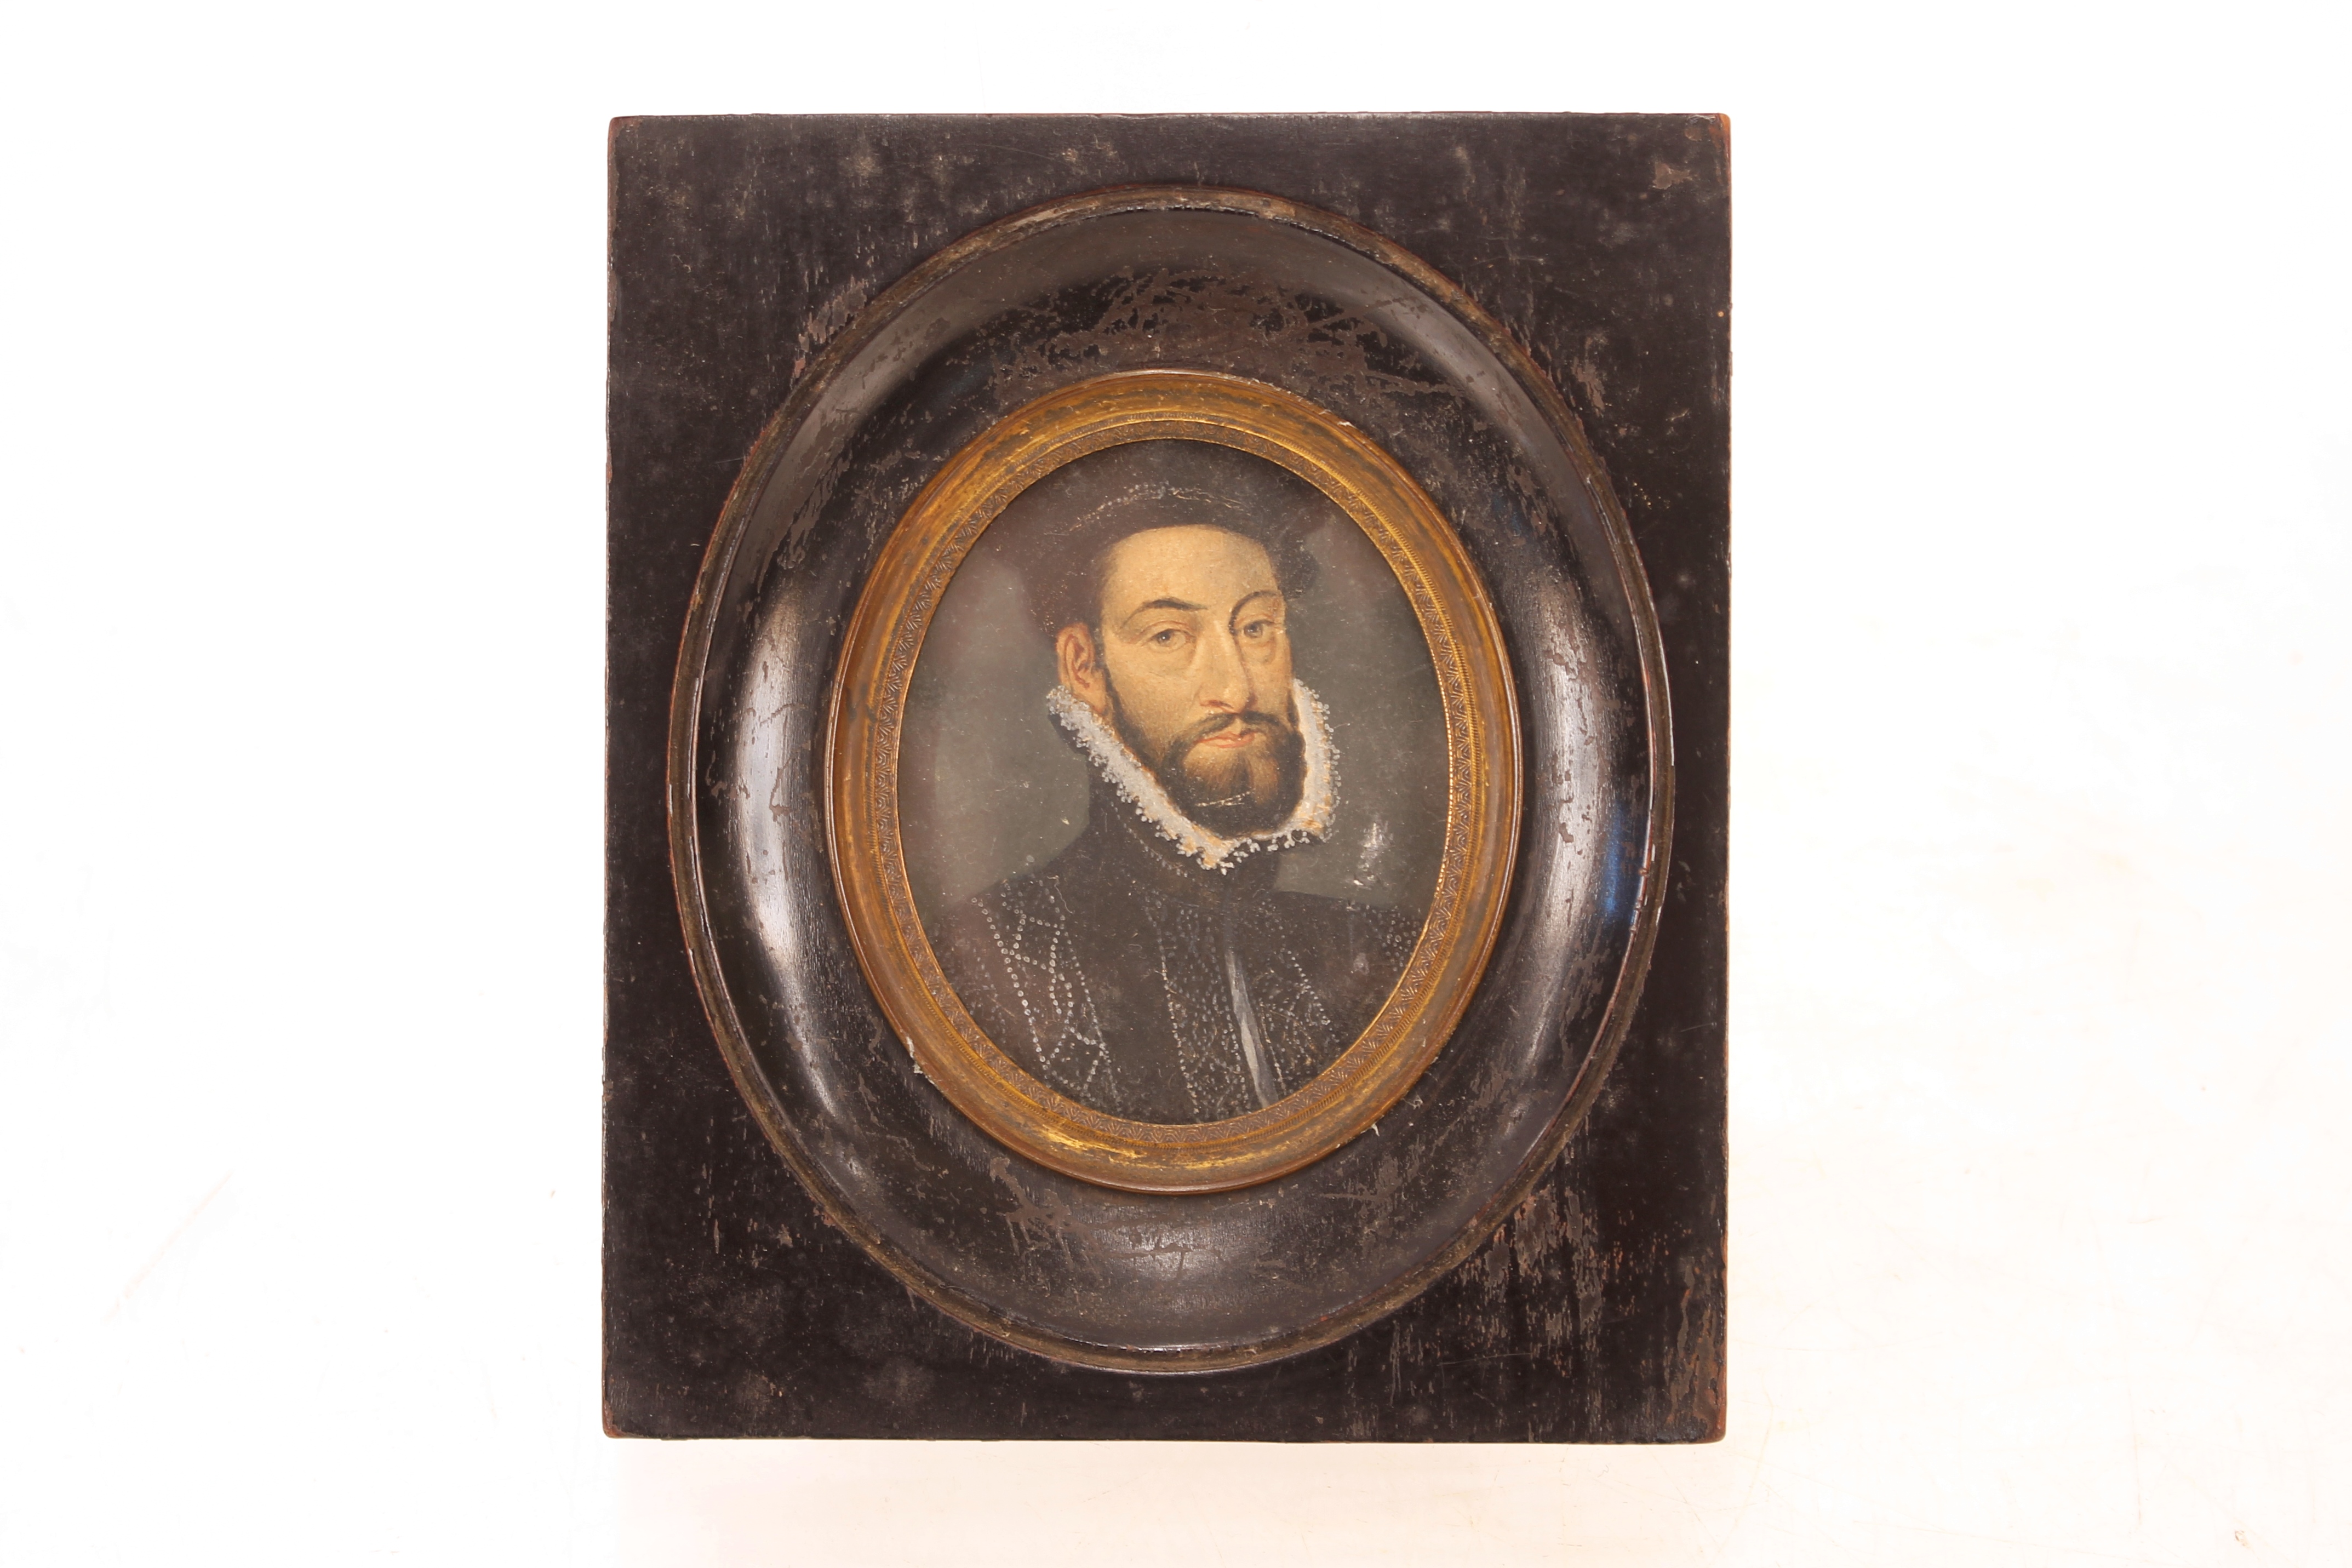 A miniature portrait study of an Elizabethan gentleman, inscribed verso "Regant Murray" in